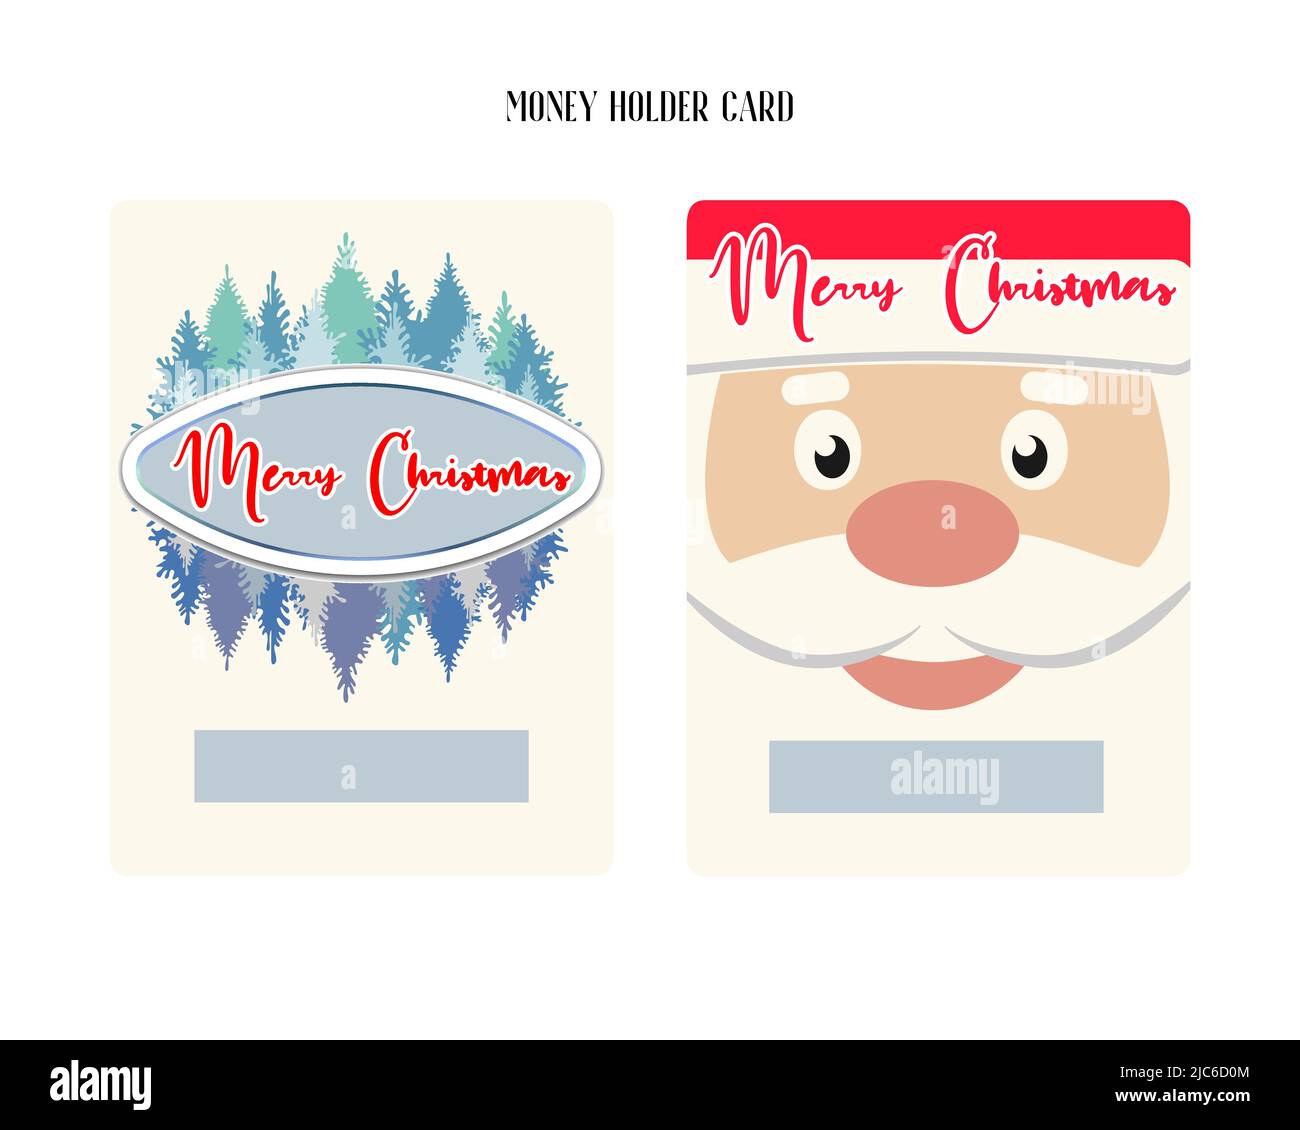 Printable Christmas Money Holder set, Gift card, Cash Money Holder template for crafting. Stock Vector